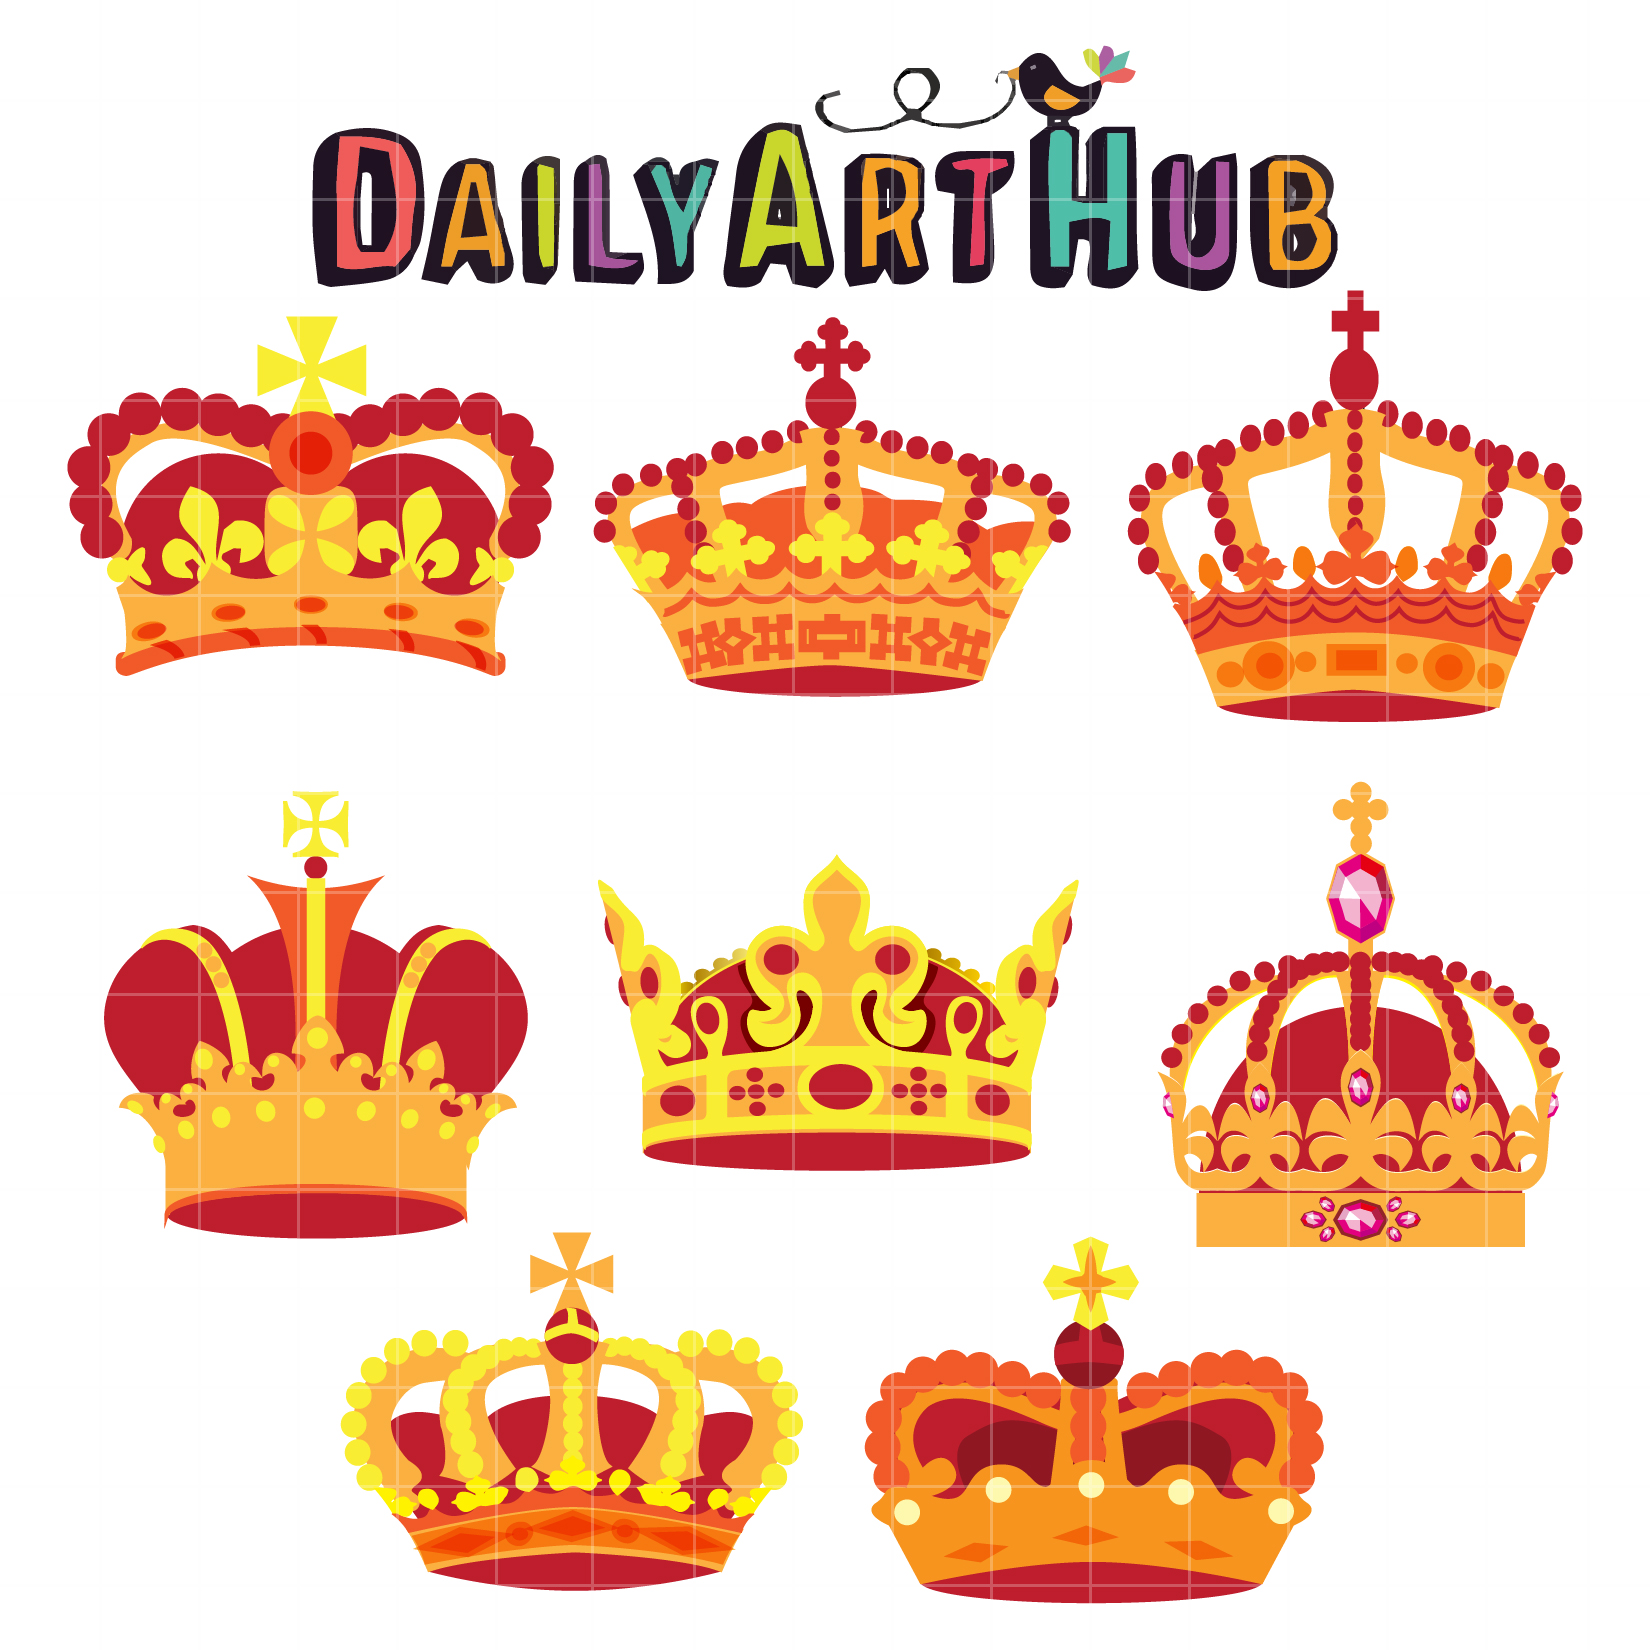 gold royal crown clip art